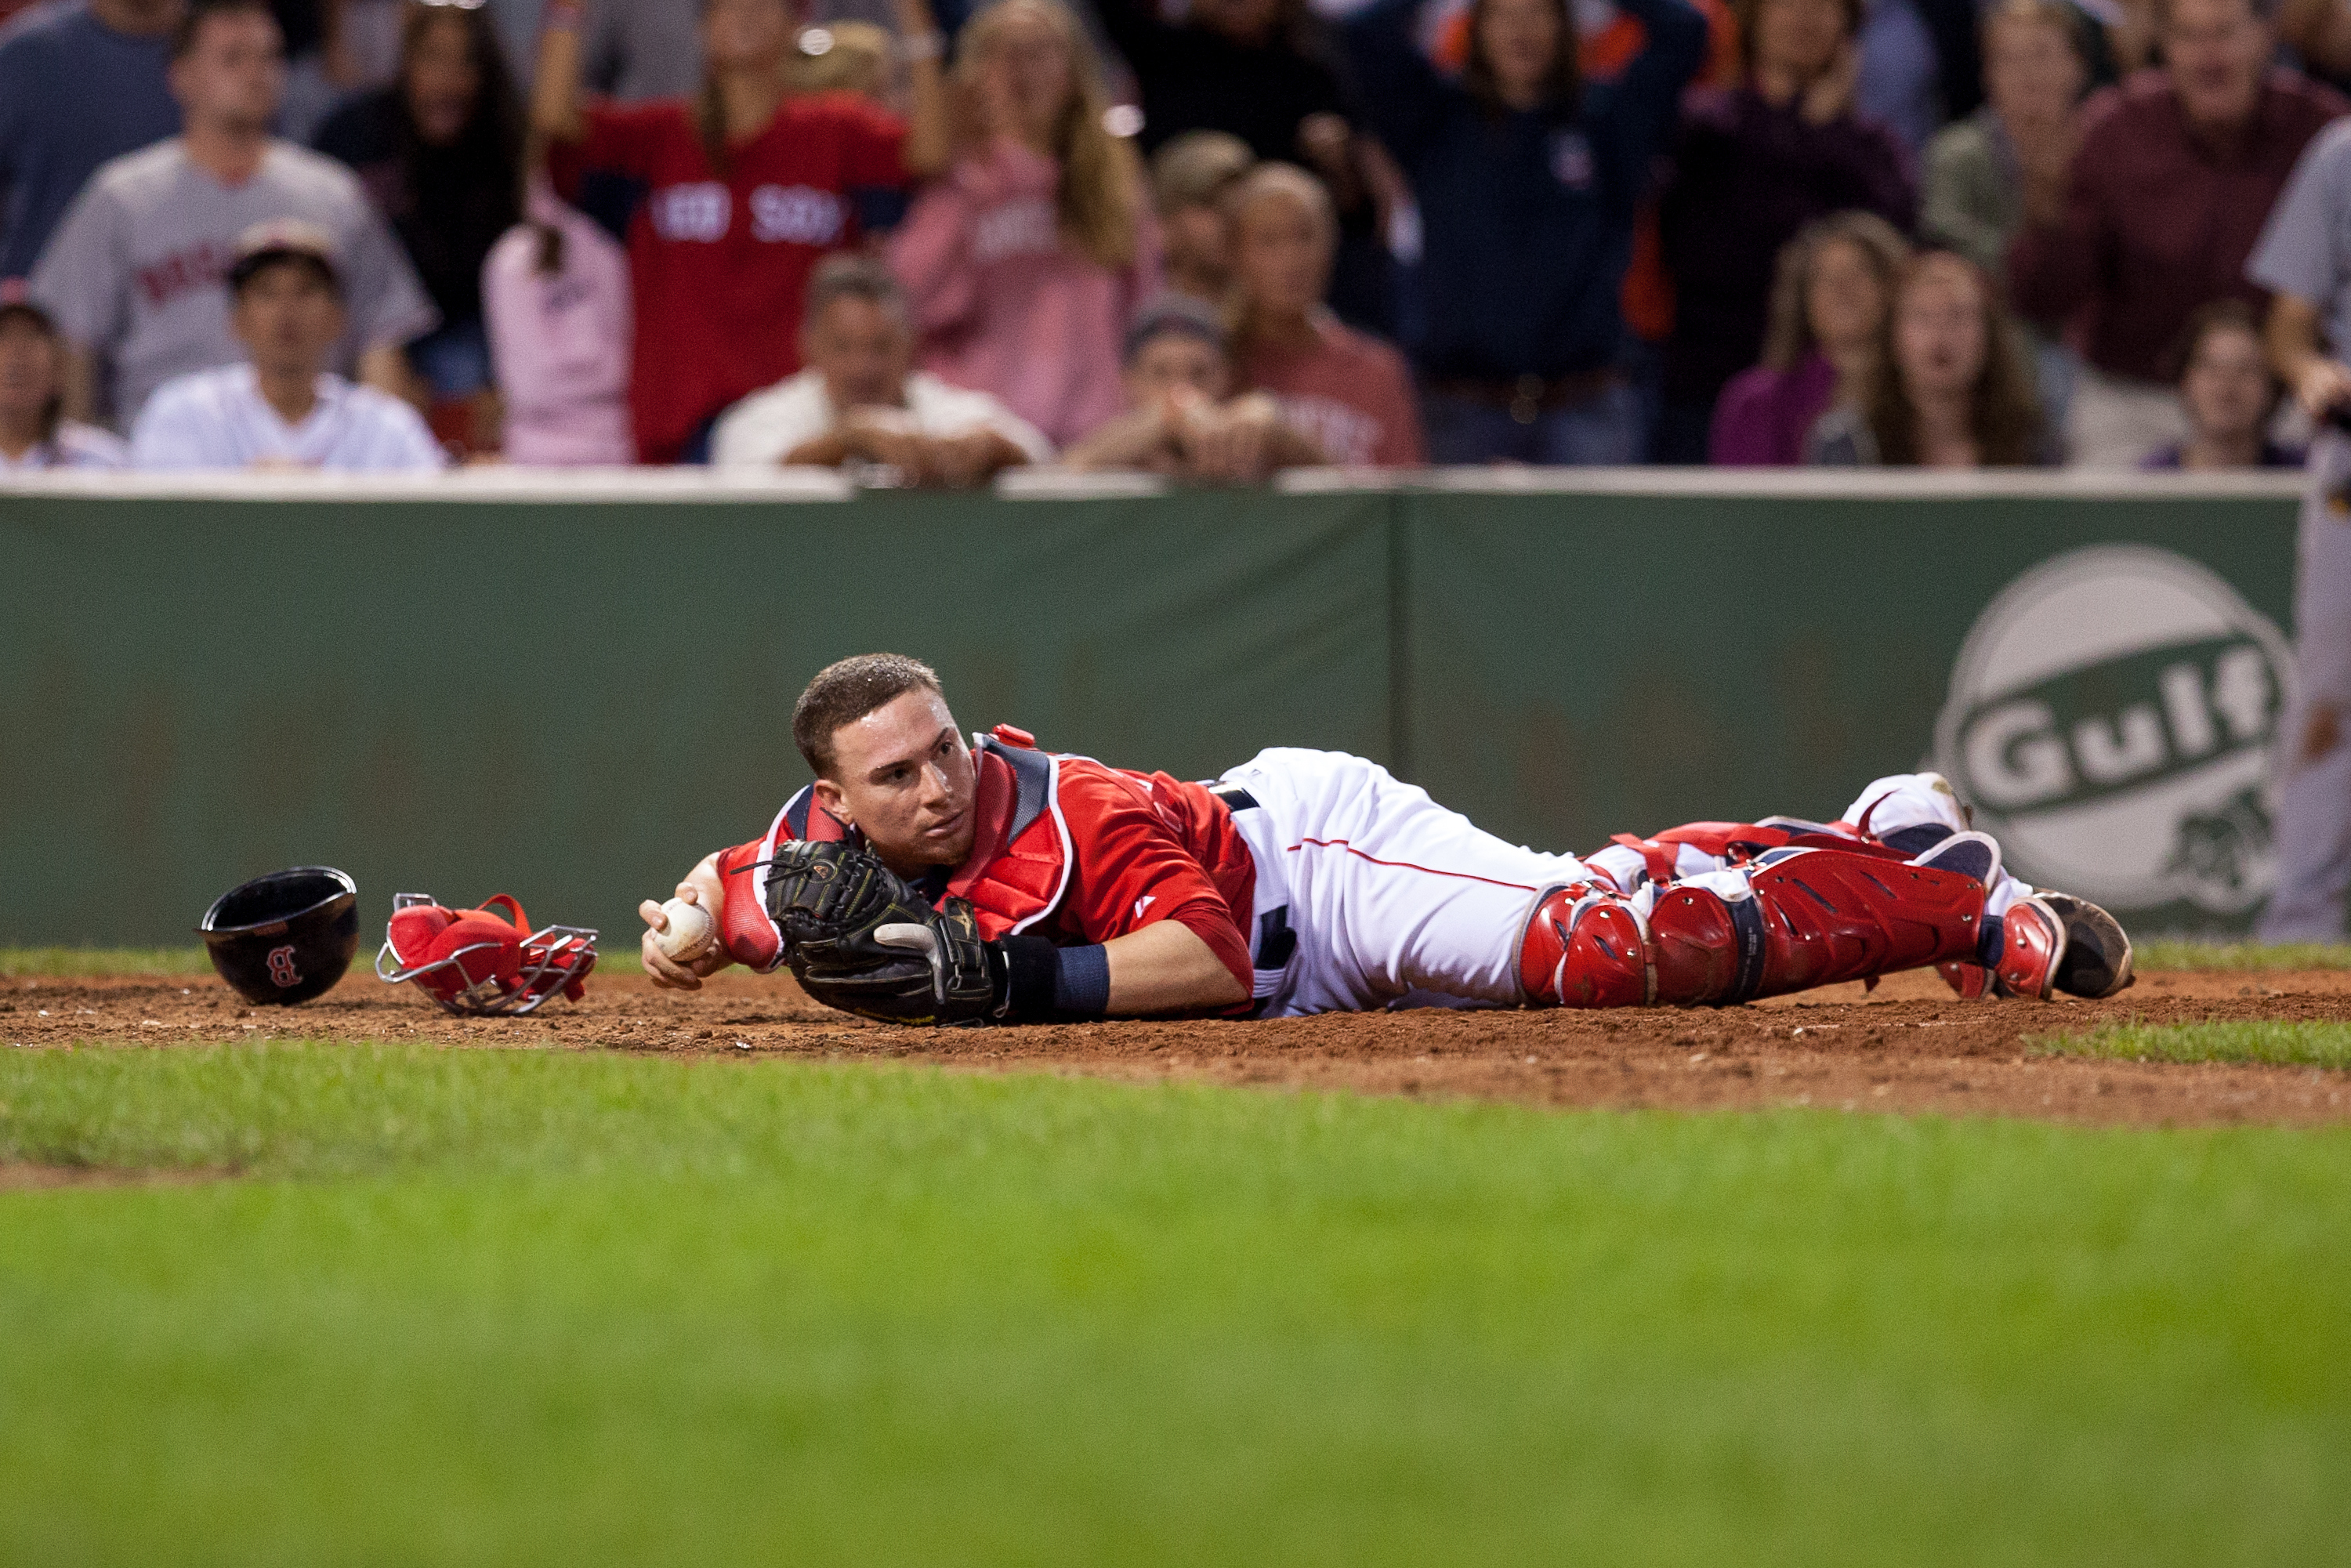 Red Sox catcher Christian Vazquez joins elite class at his position